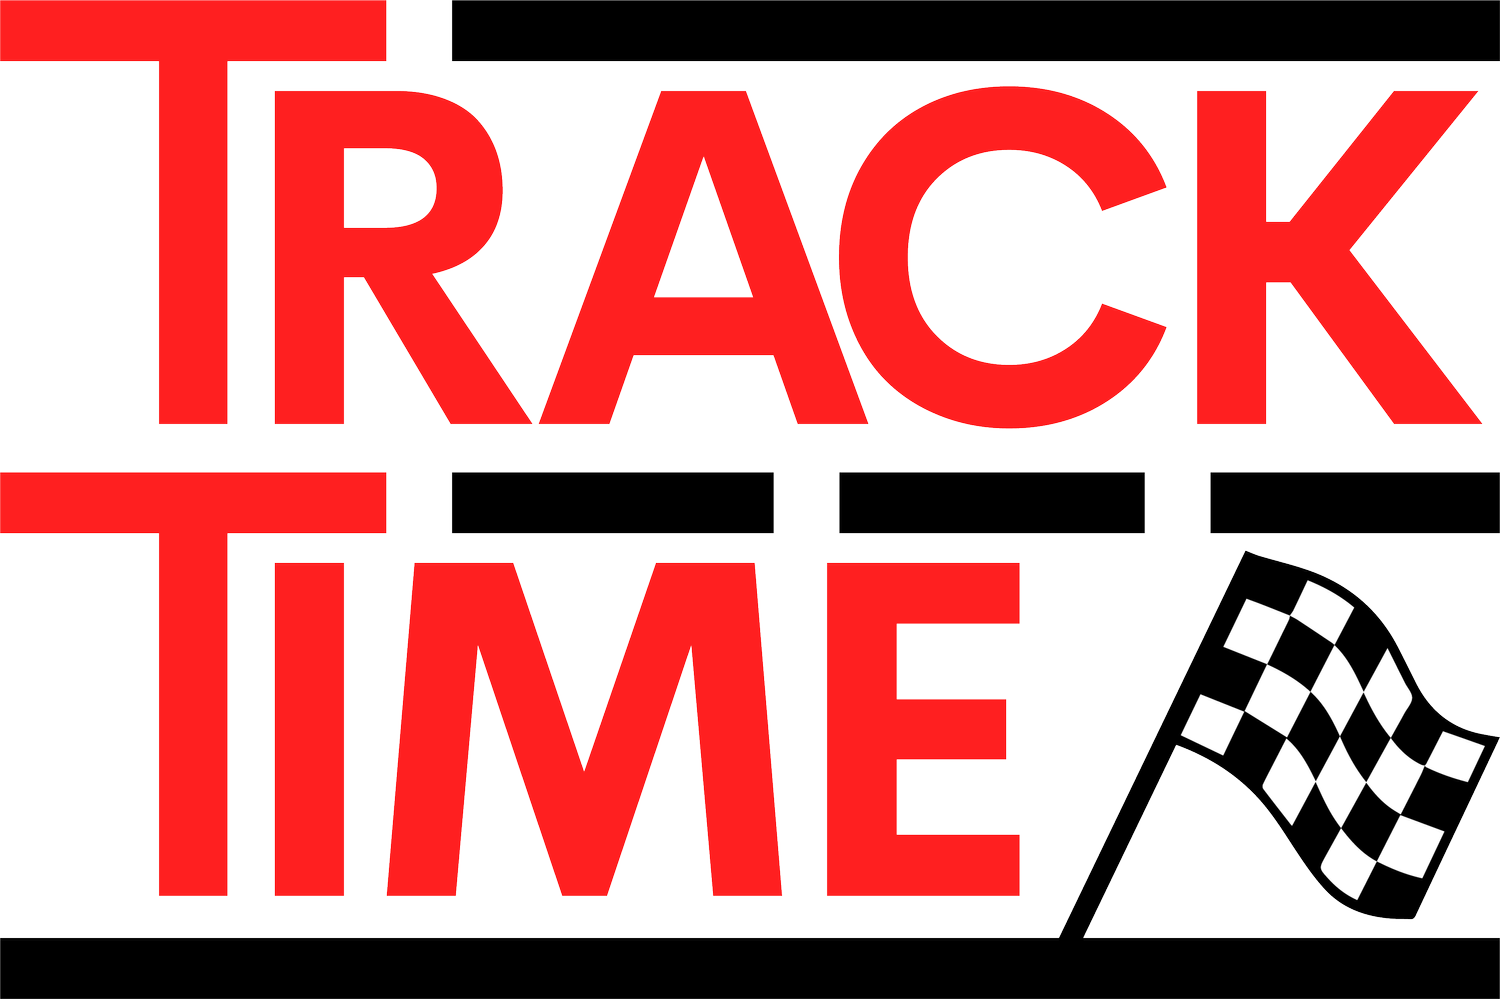 TRACK TIME LLC